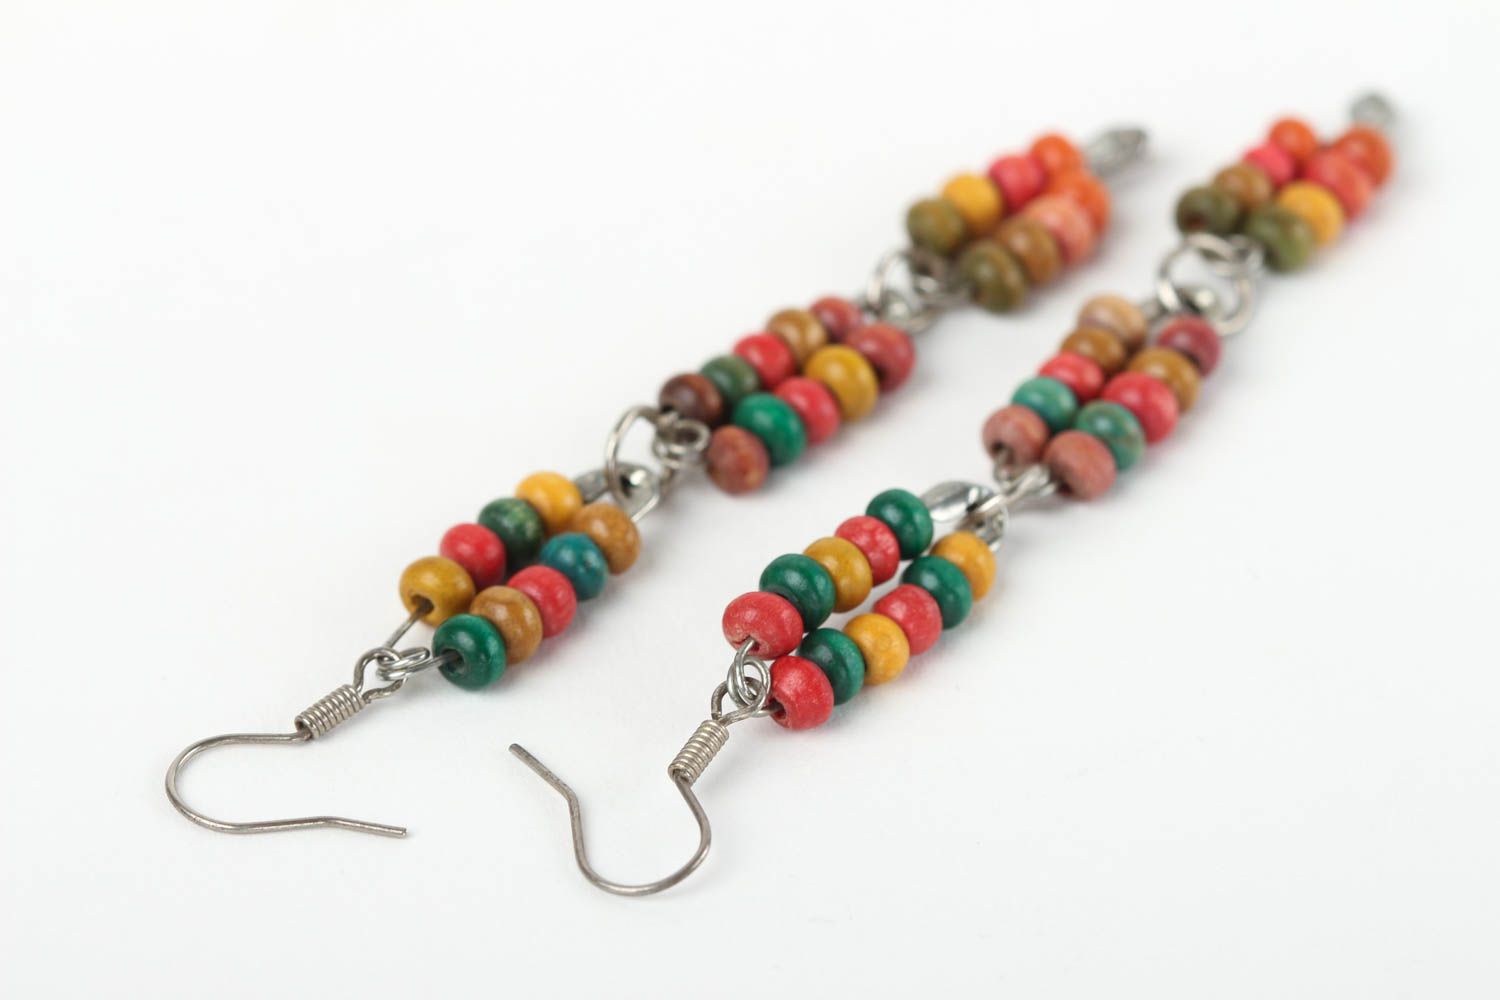 Handmade wooden earrings with charms colorful earrings long earrings gift photo 4